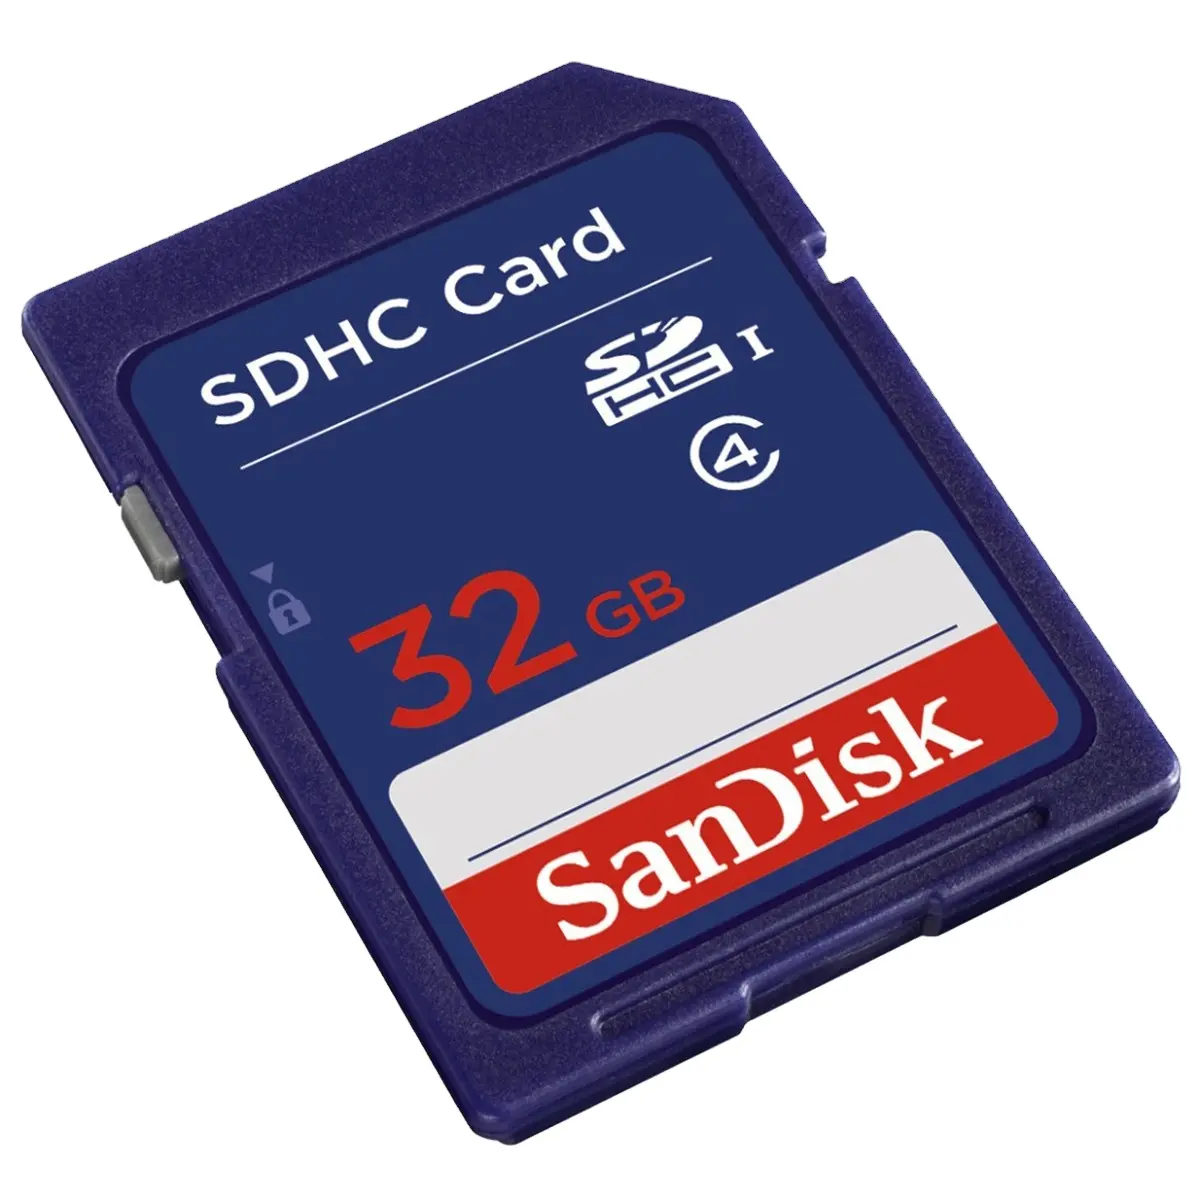 SDSDB-032G-B35แซนดิสก์คลาส4 SDHC การ์ดหน่วยความจำ SD 32G